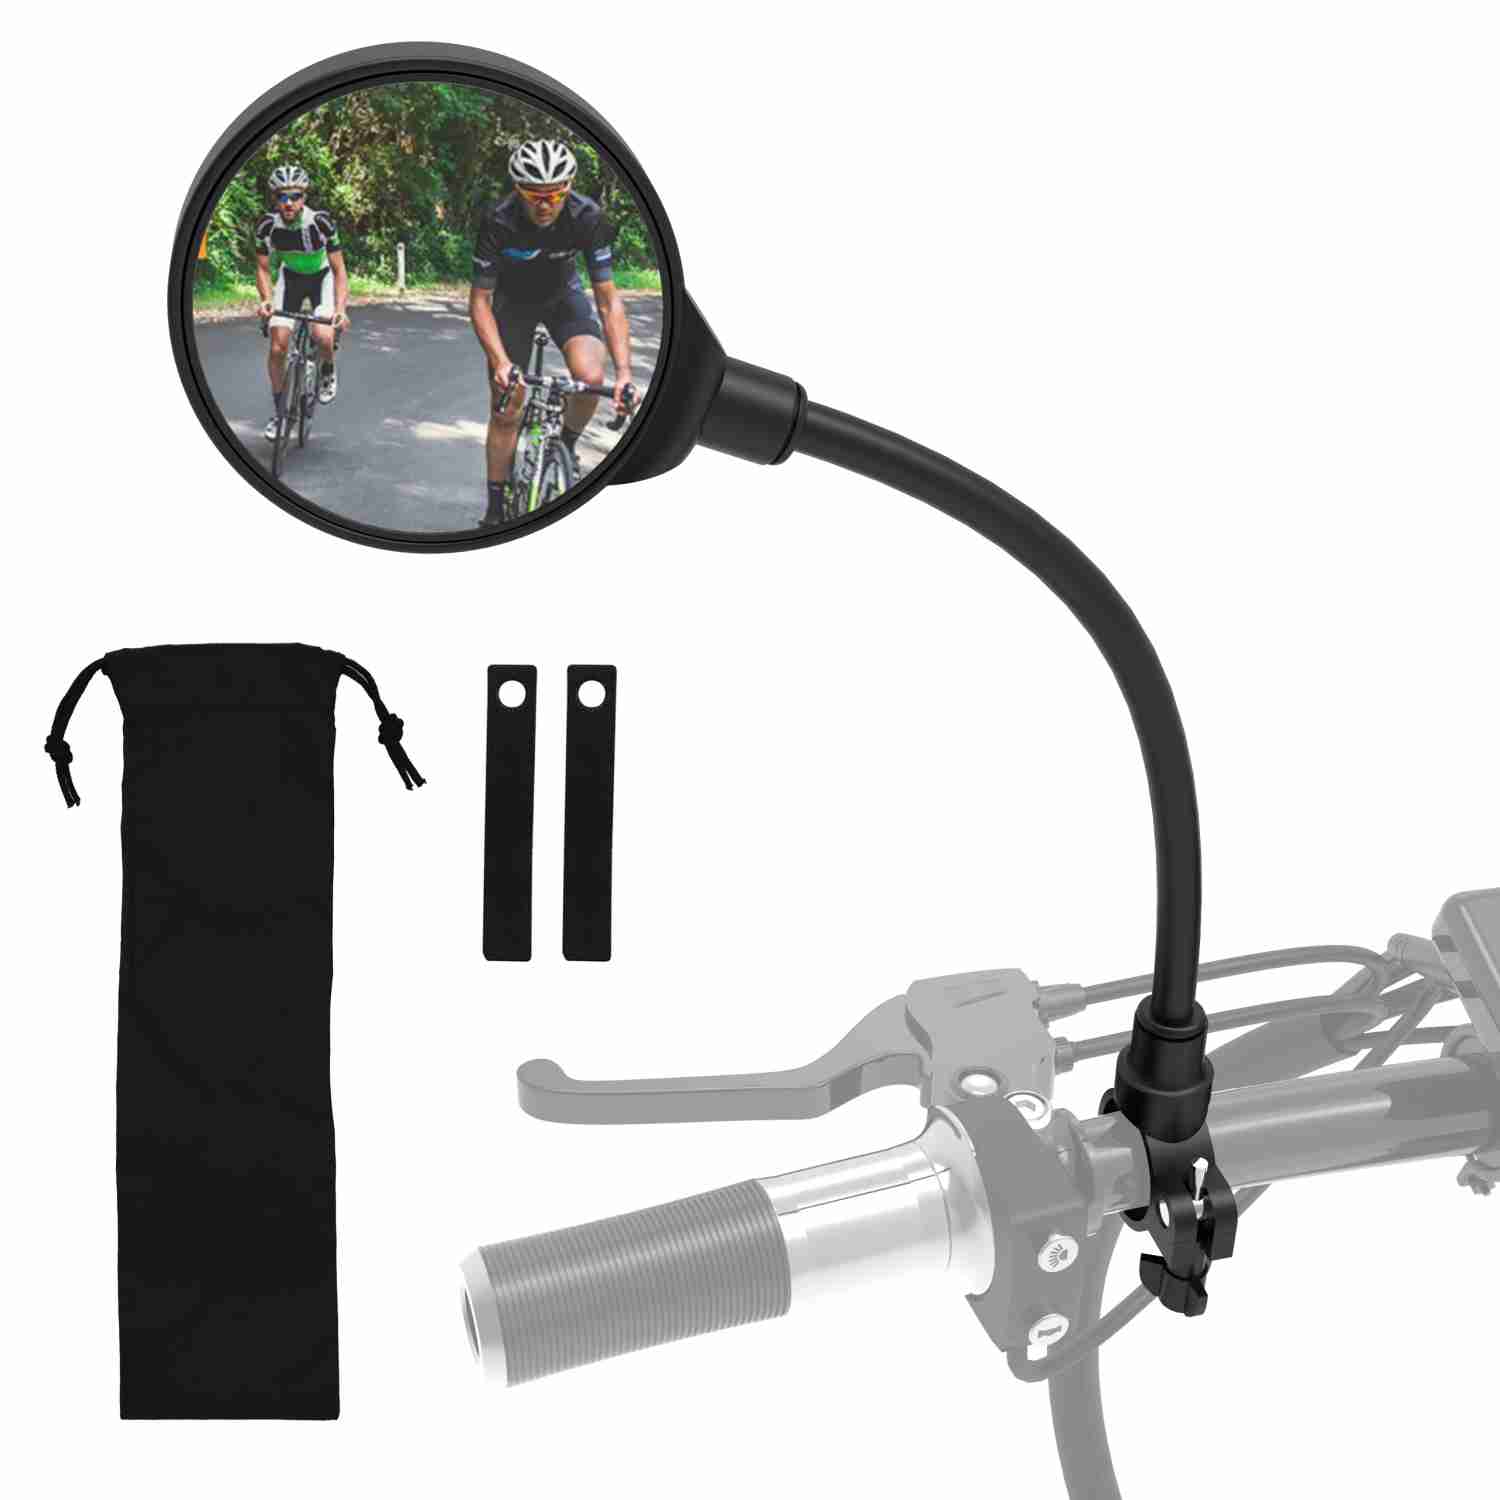 bike-mirror with cash back rebate